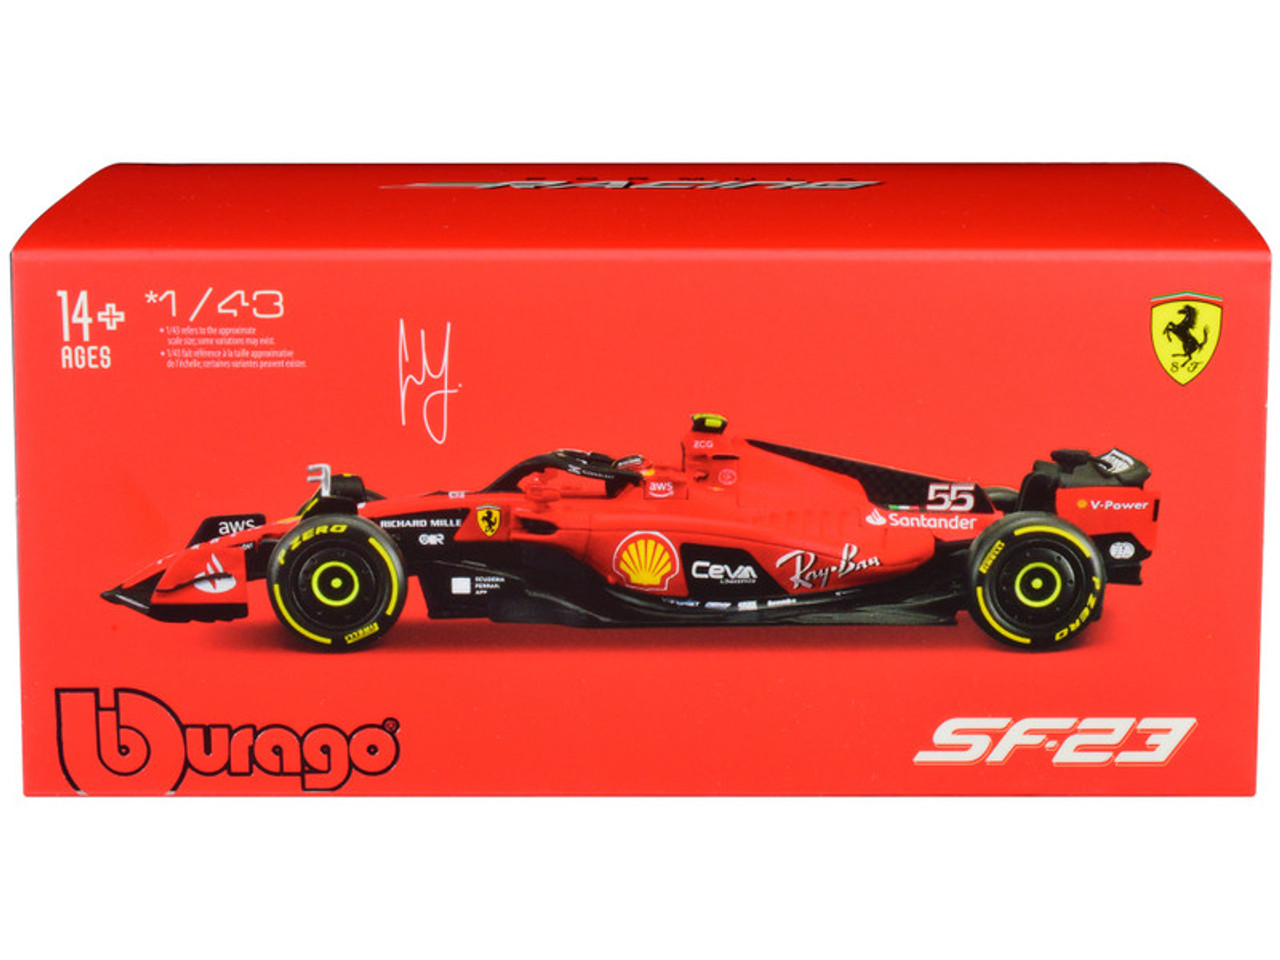 BURAGO: 7 F1 race cars in box including Ferrari williams…